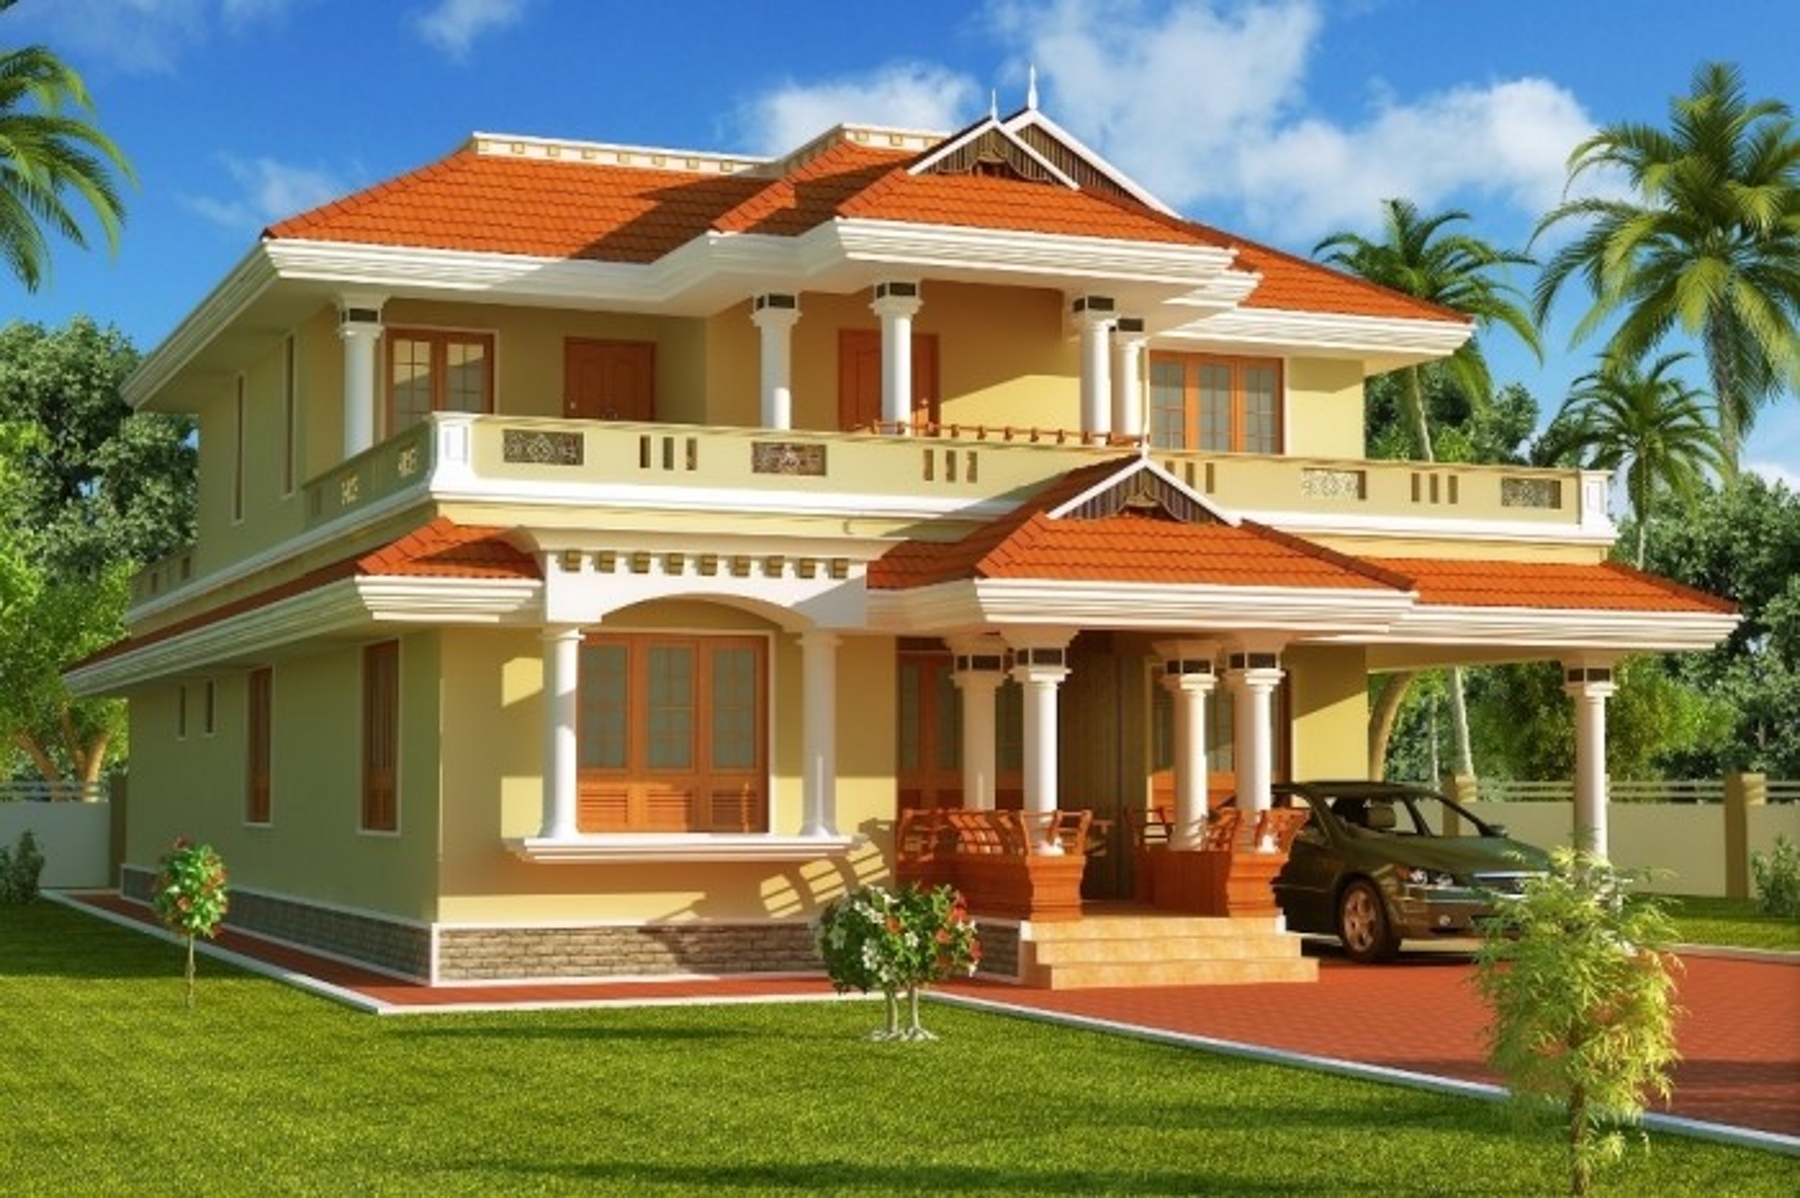 Featured image of post Best Exterior Paint Colors For Indian Homes - Asians paints colour combinations colour combinations exterior &amp; interior homes.